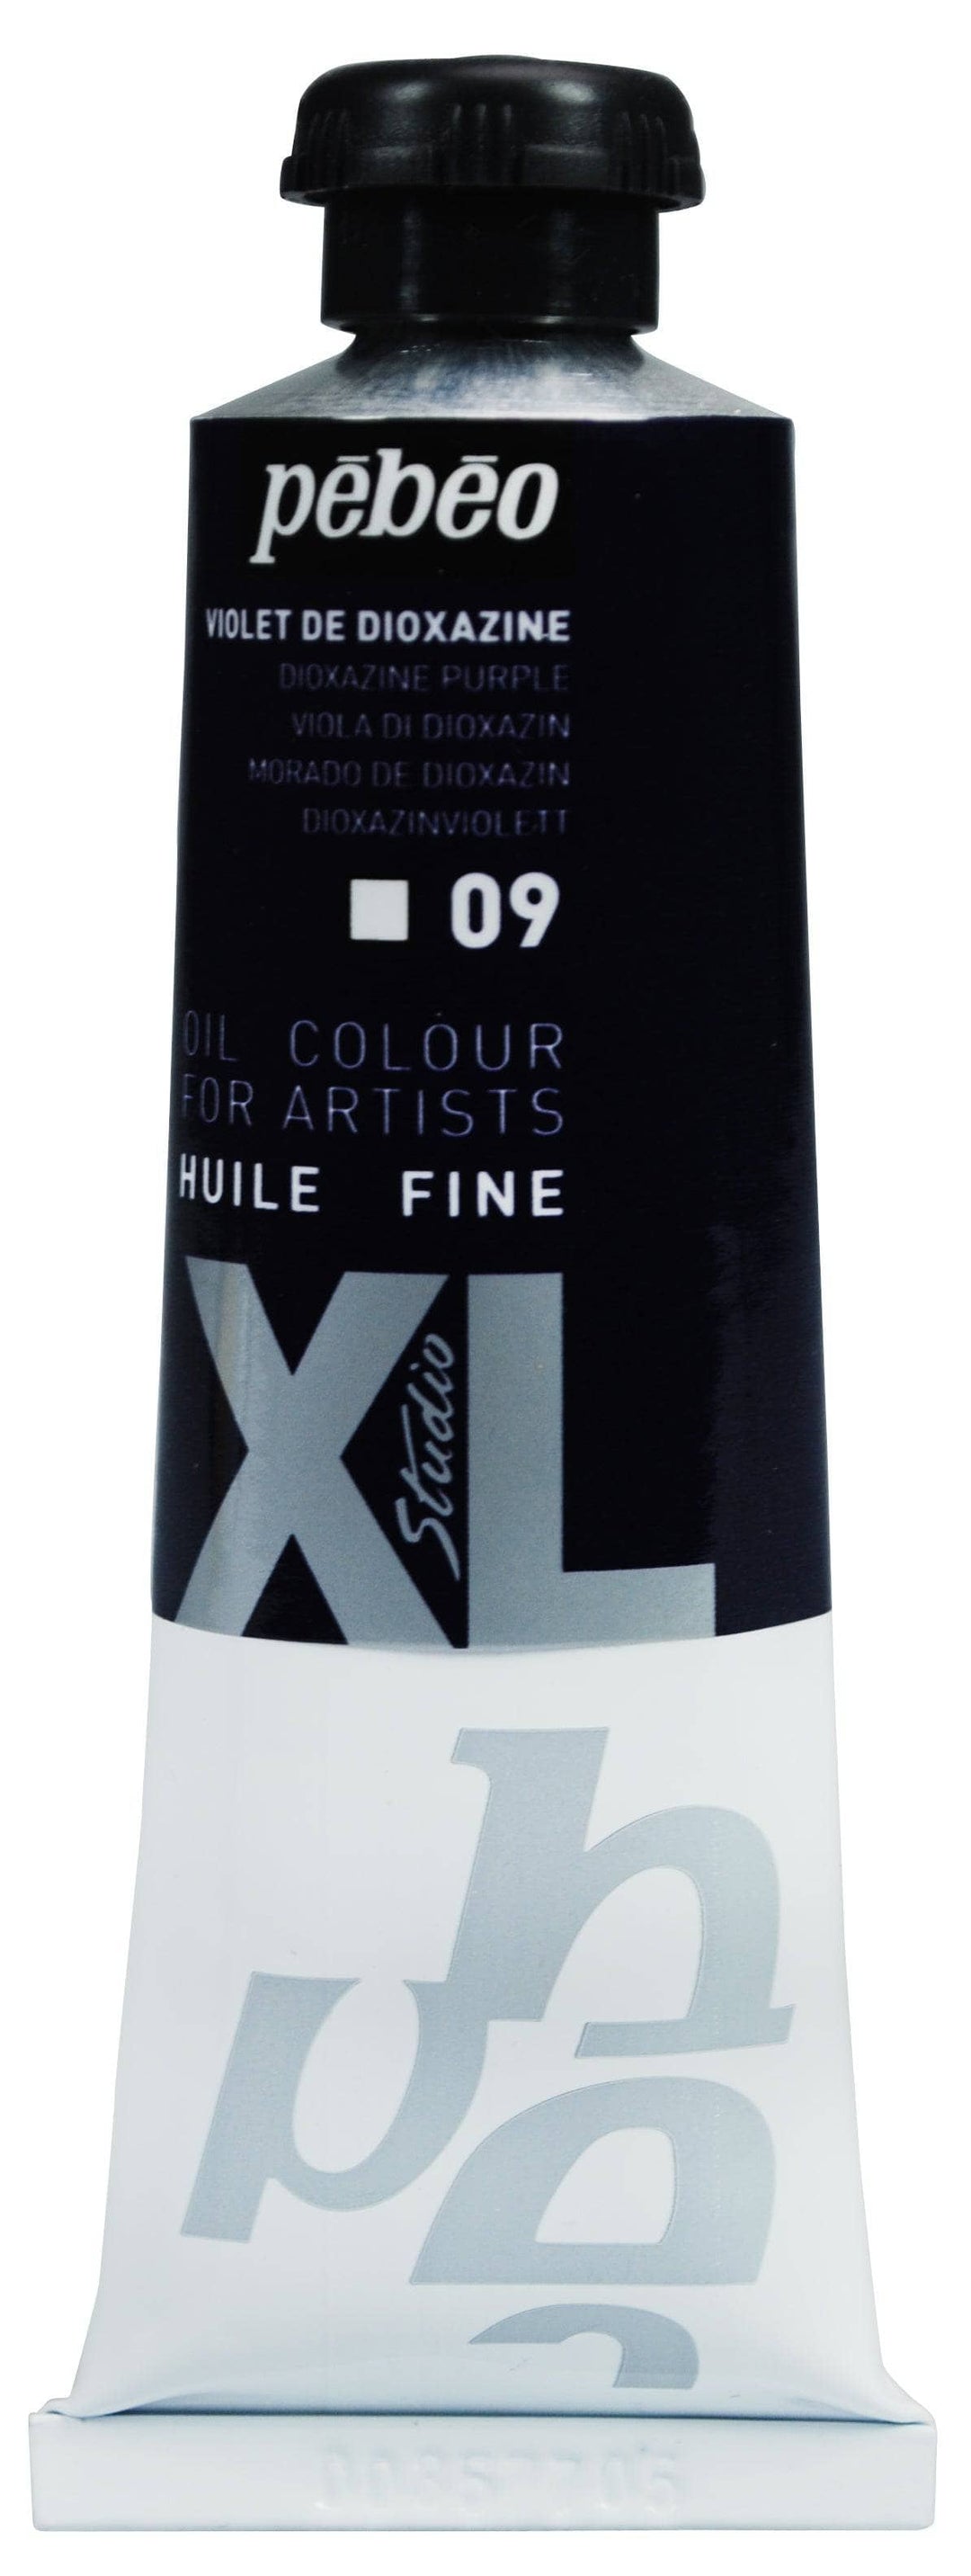 Huile fine Studio XL 37ml - Violet de Dioxazine
PB937009